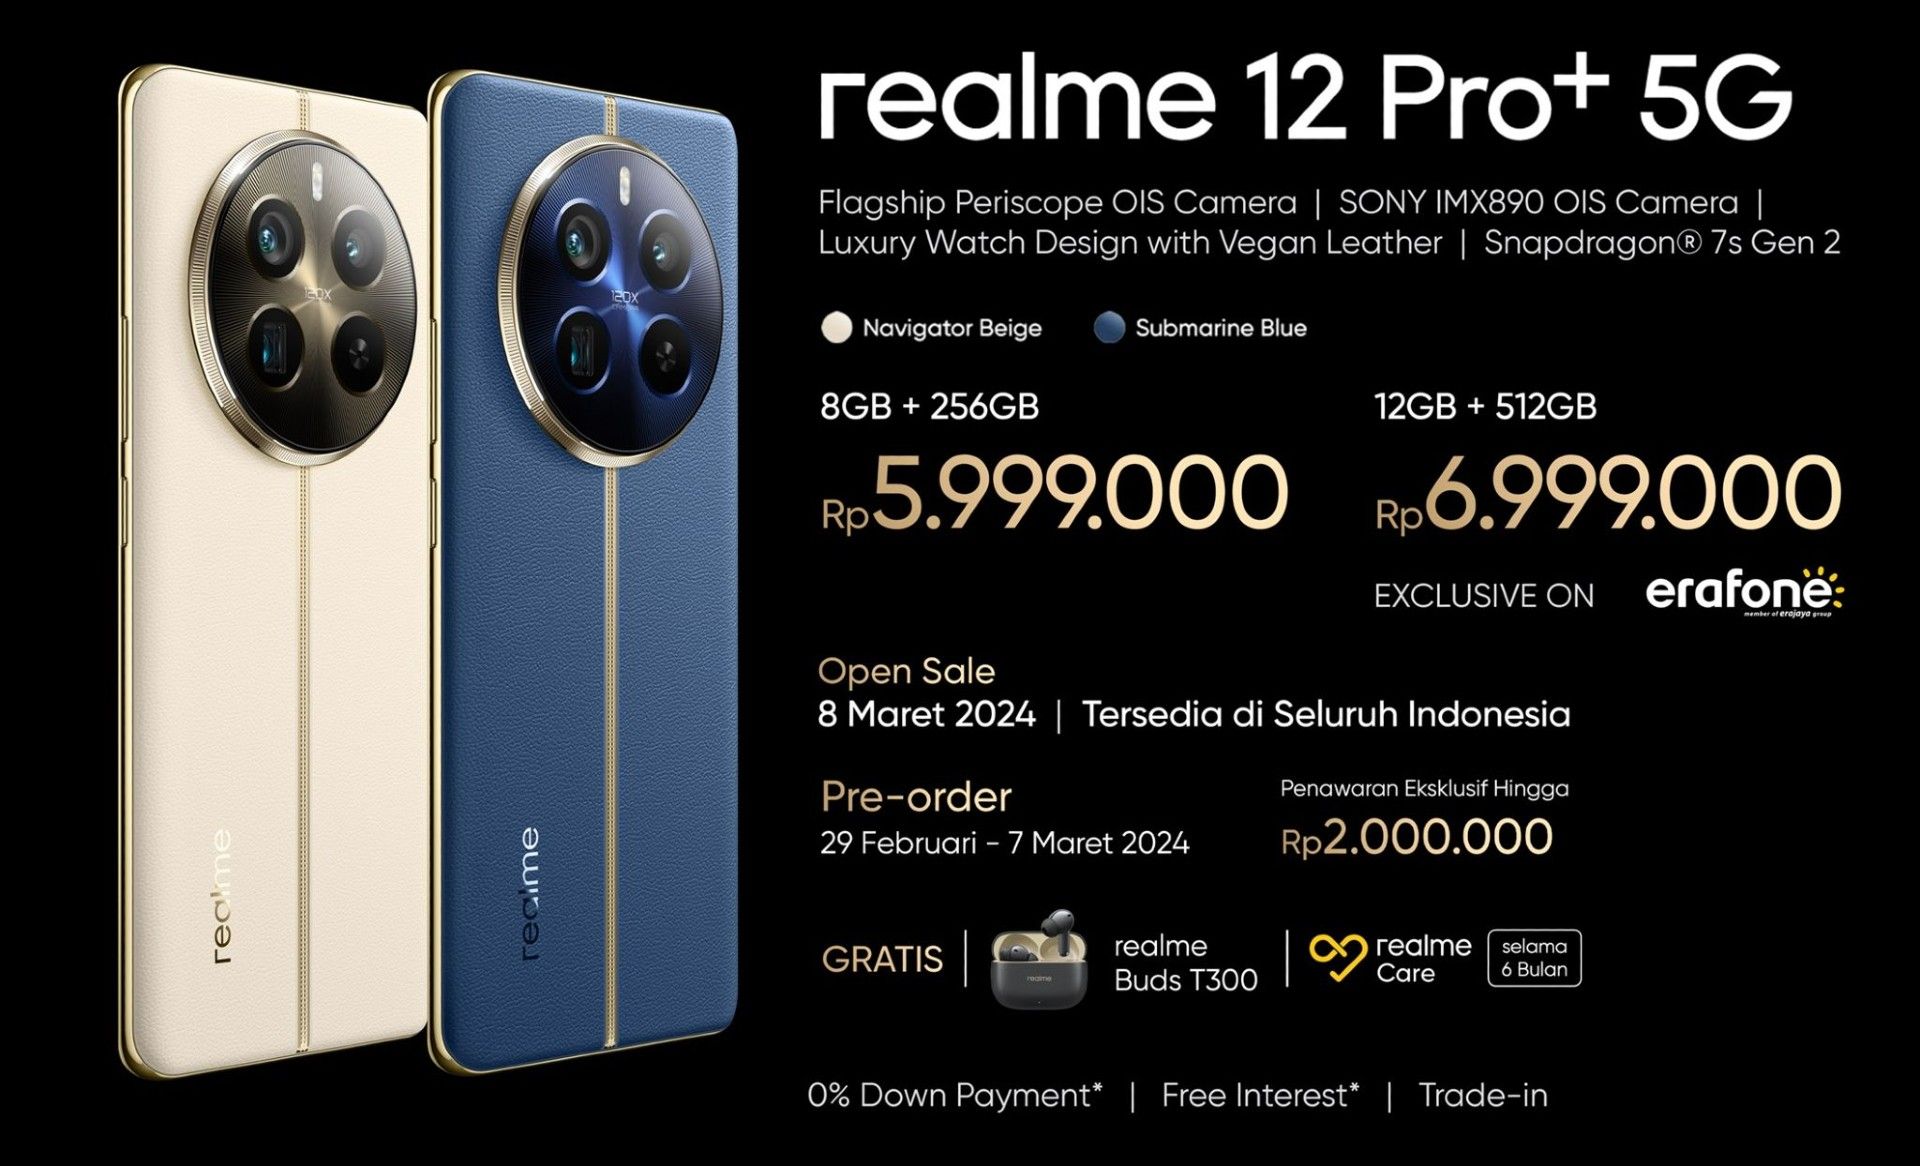 Realme 12 Pro Plus 5G